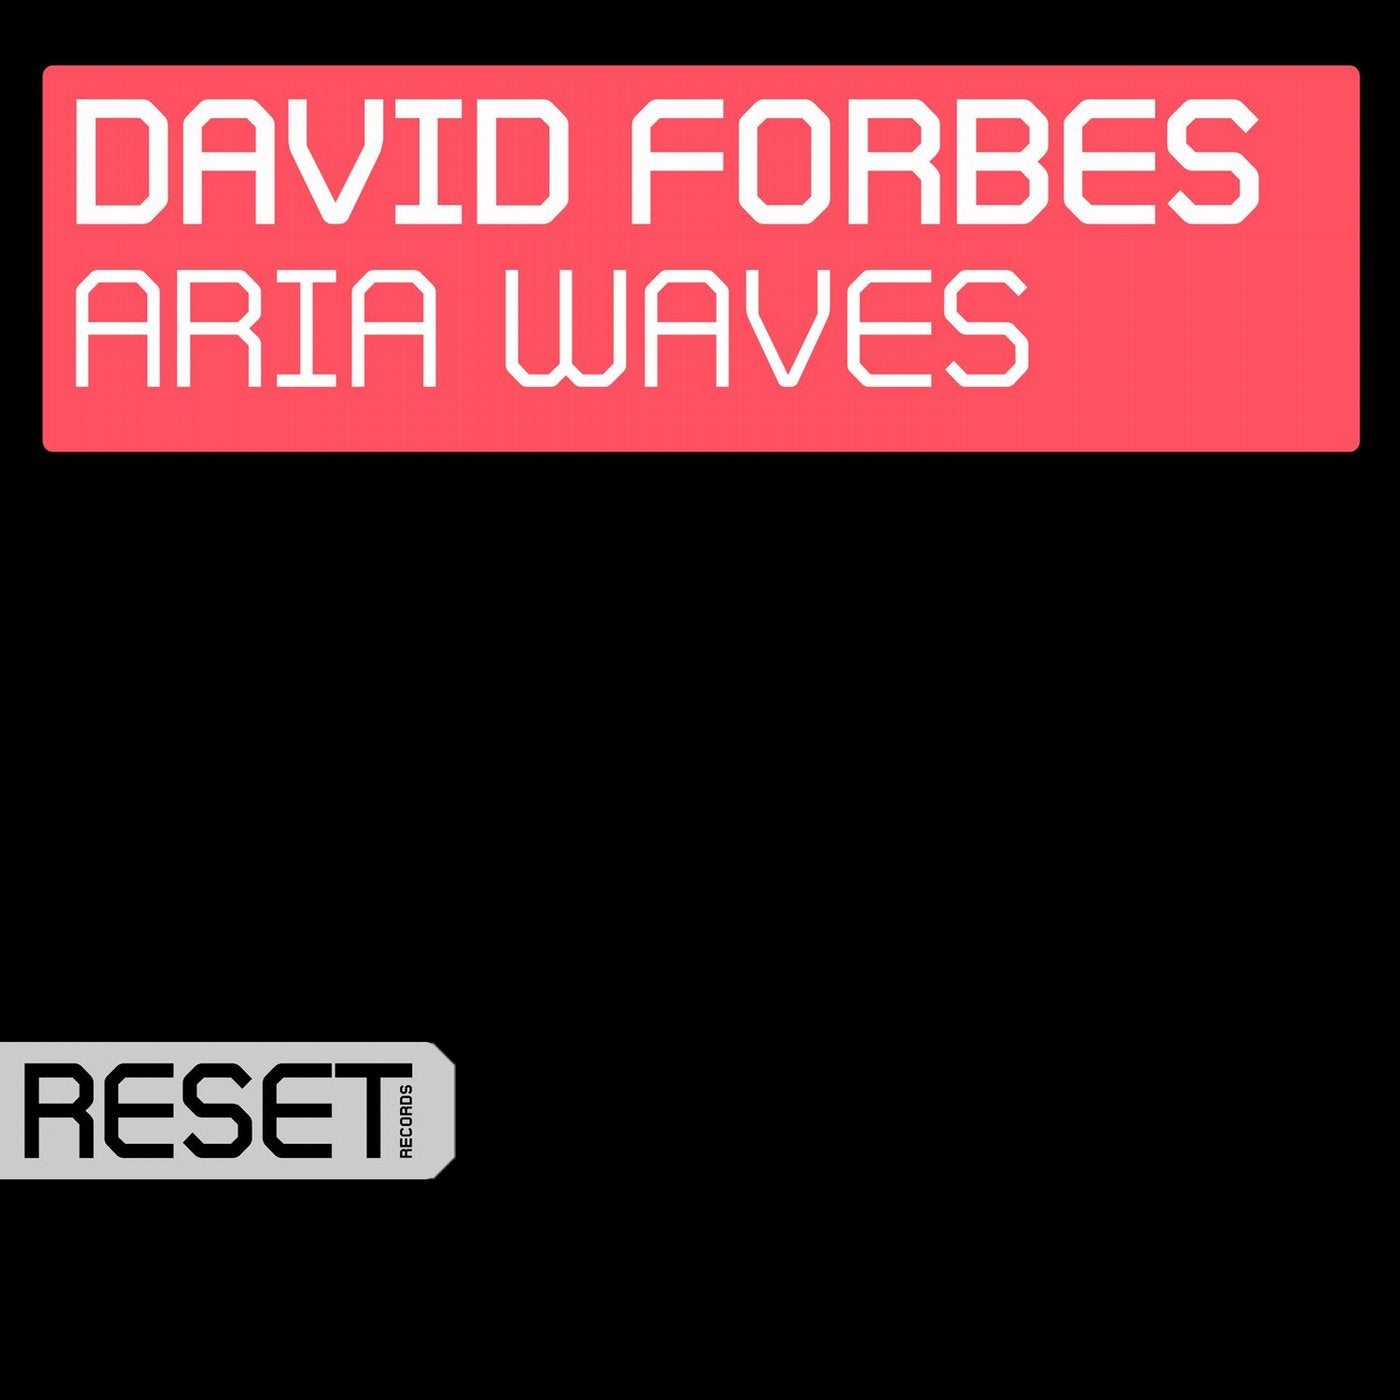 Aria Waves